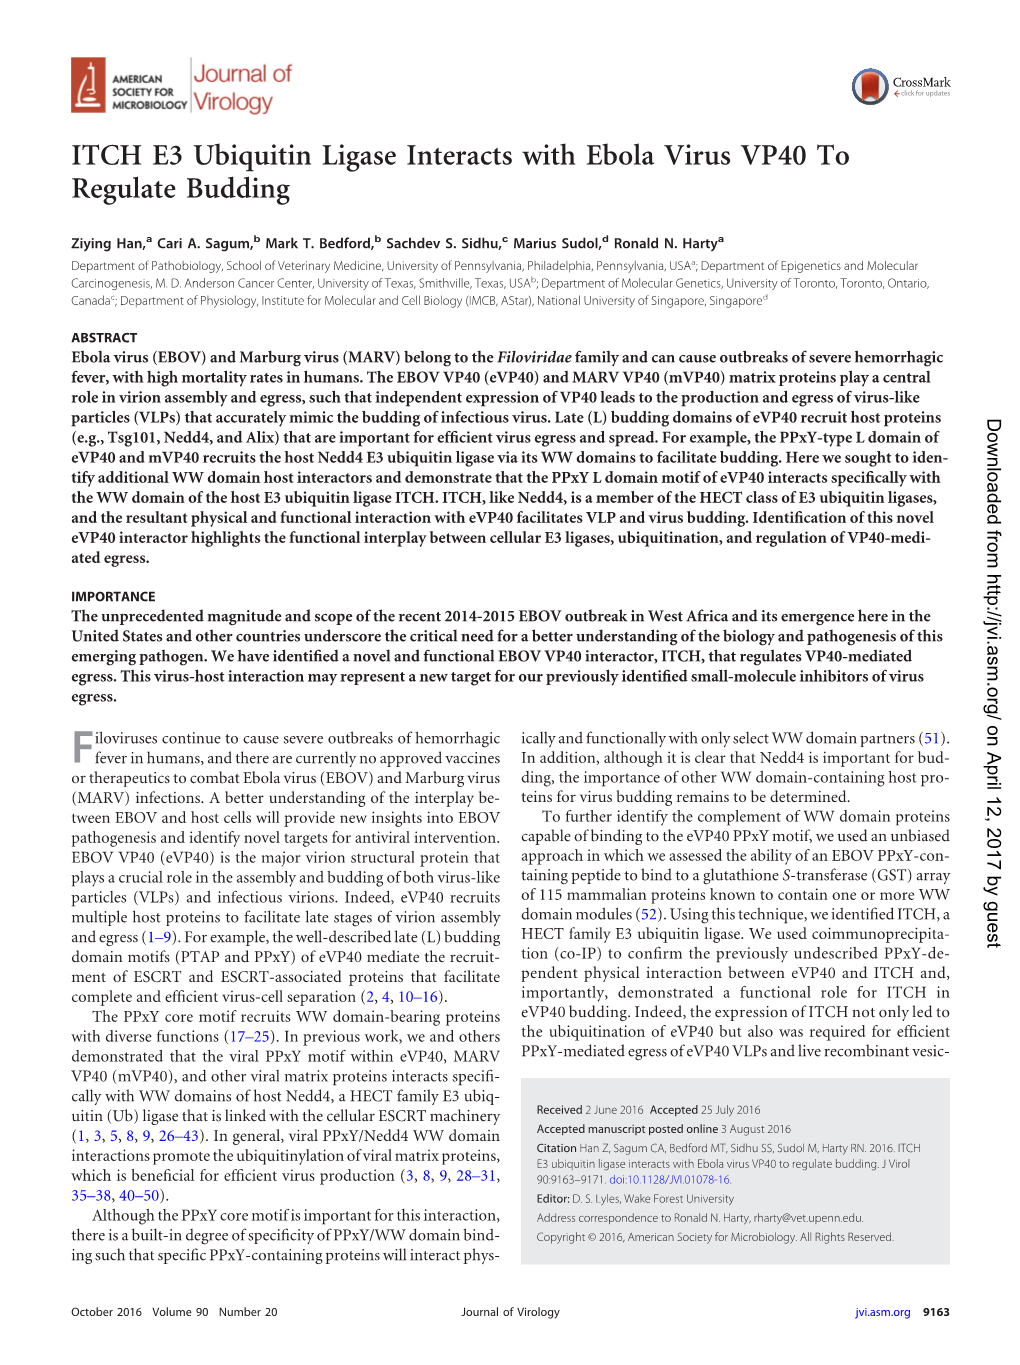 ITCH E3 Ubiquitin Ligase Interacts with Ebola Virus VP40 to Regulate Budding